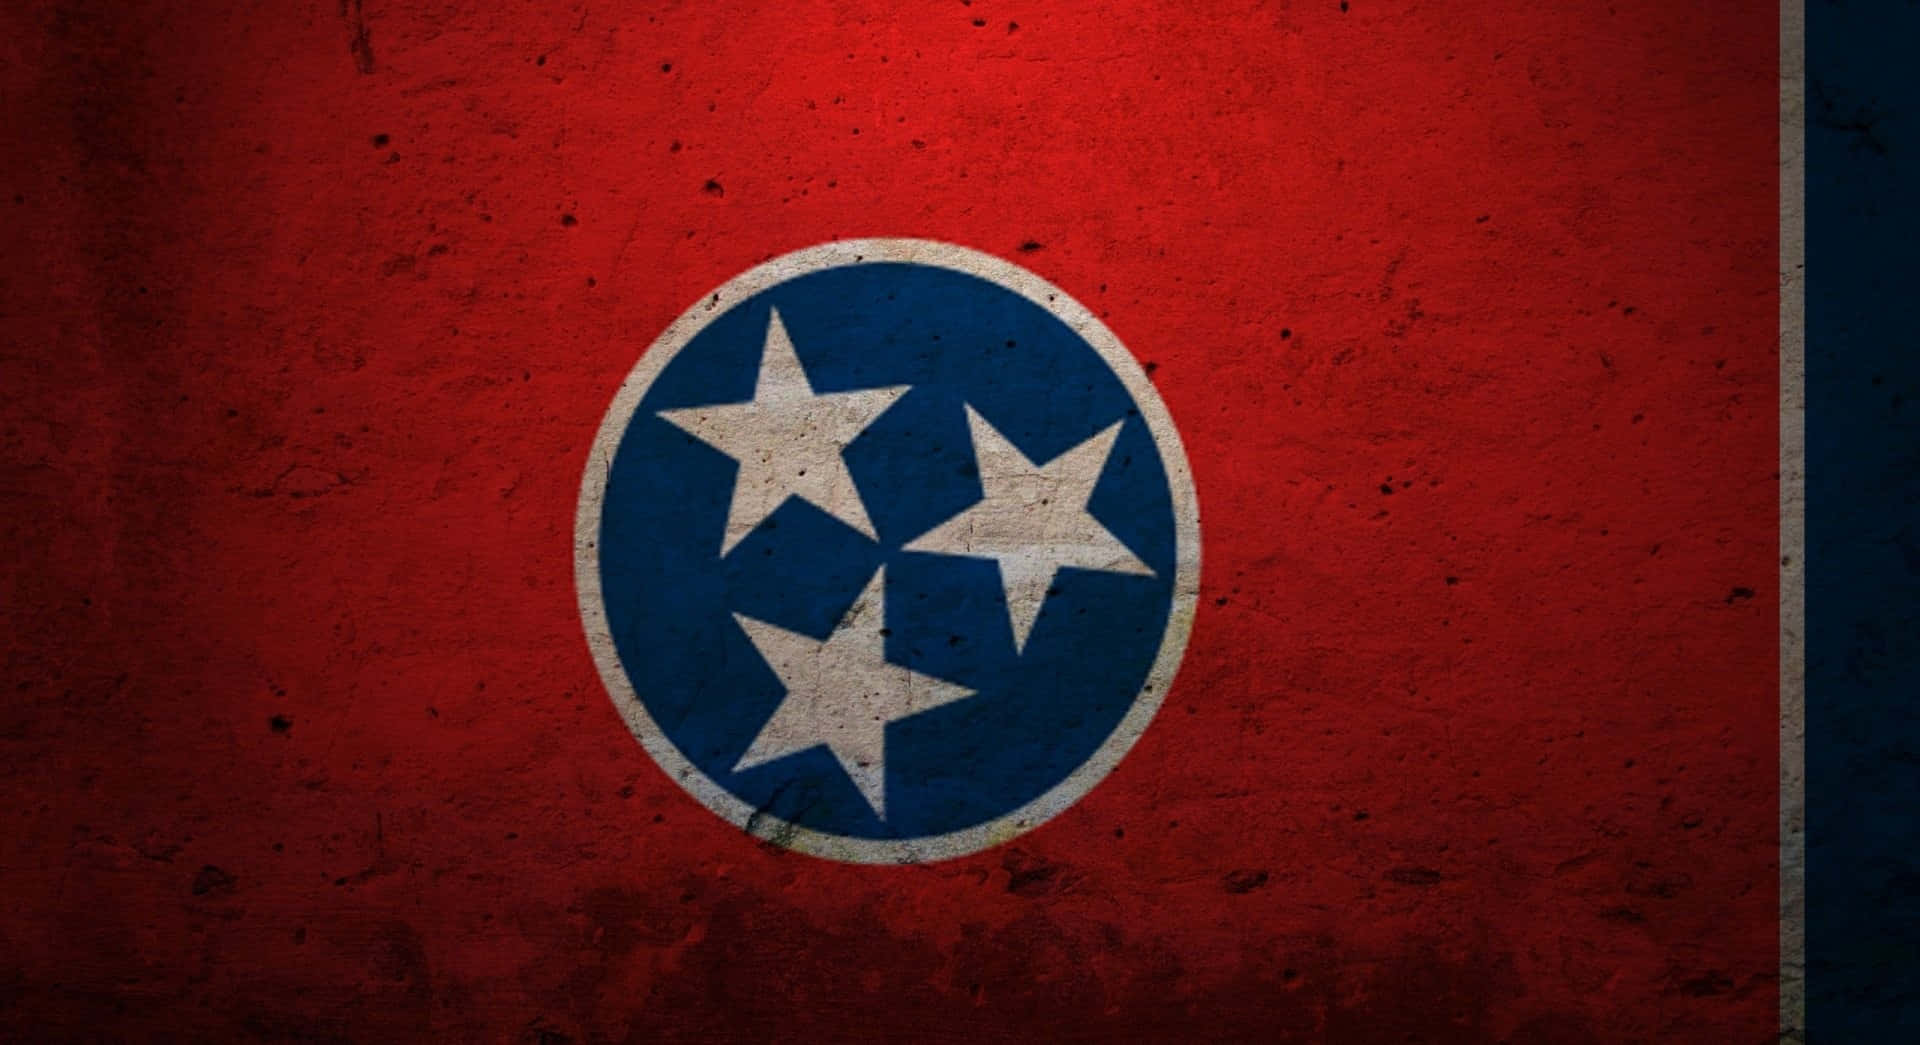 Tennesseeflaggansymboliserar Stoltheten Hos Invånarna I Tennessee Som Bakgrundsbild På Datorn Eller Mobilen. Wallpaper